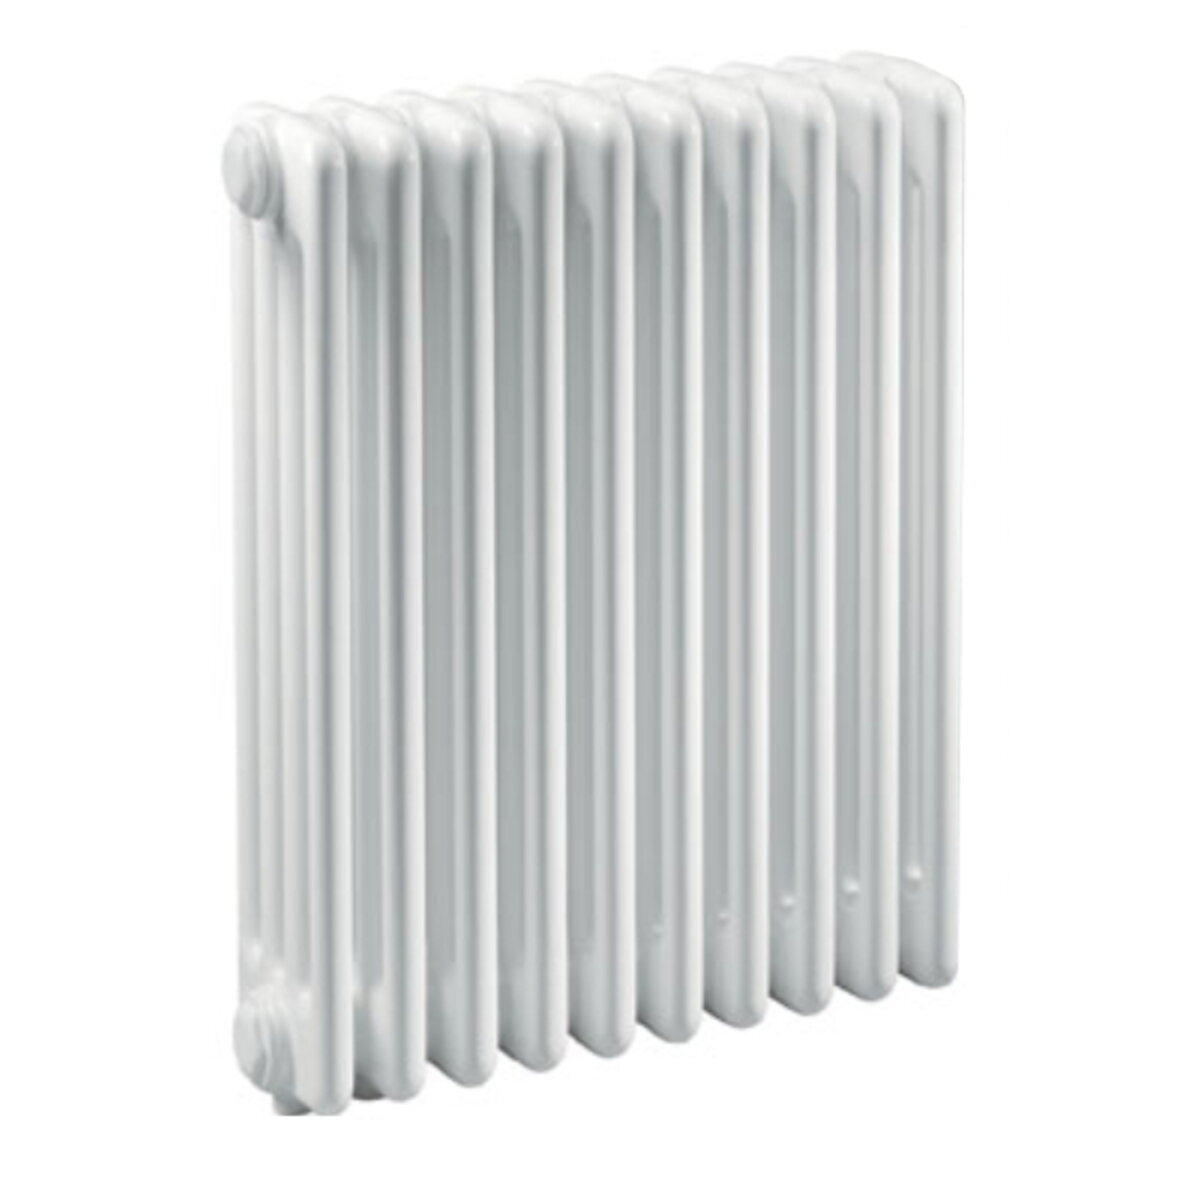 Ercos Comby steel column radiator 10 elements 3 columns center distance 935 mm